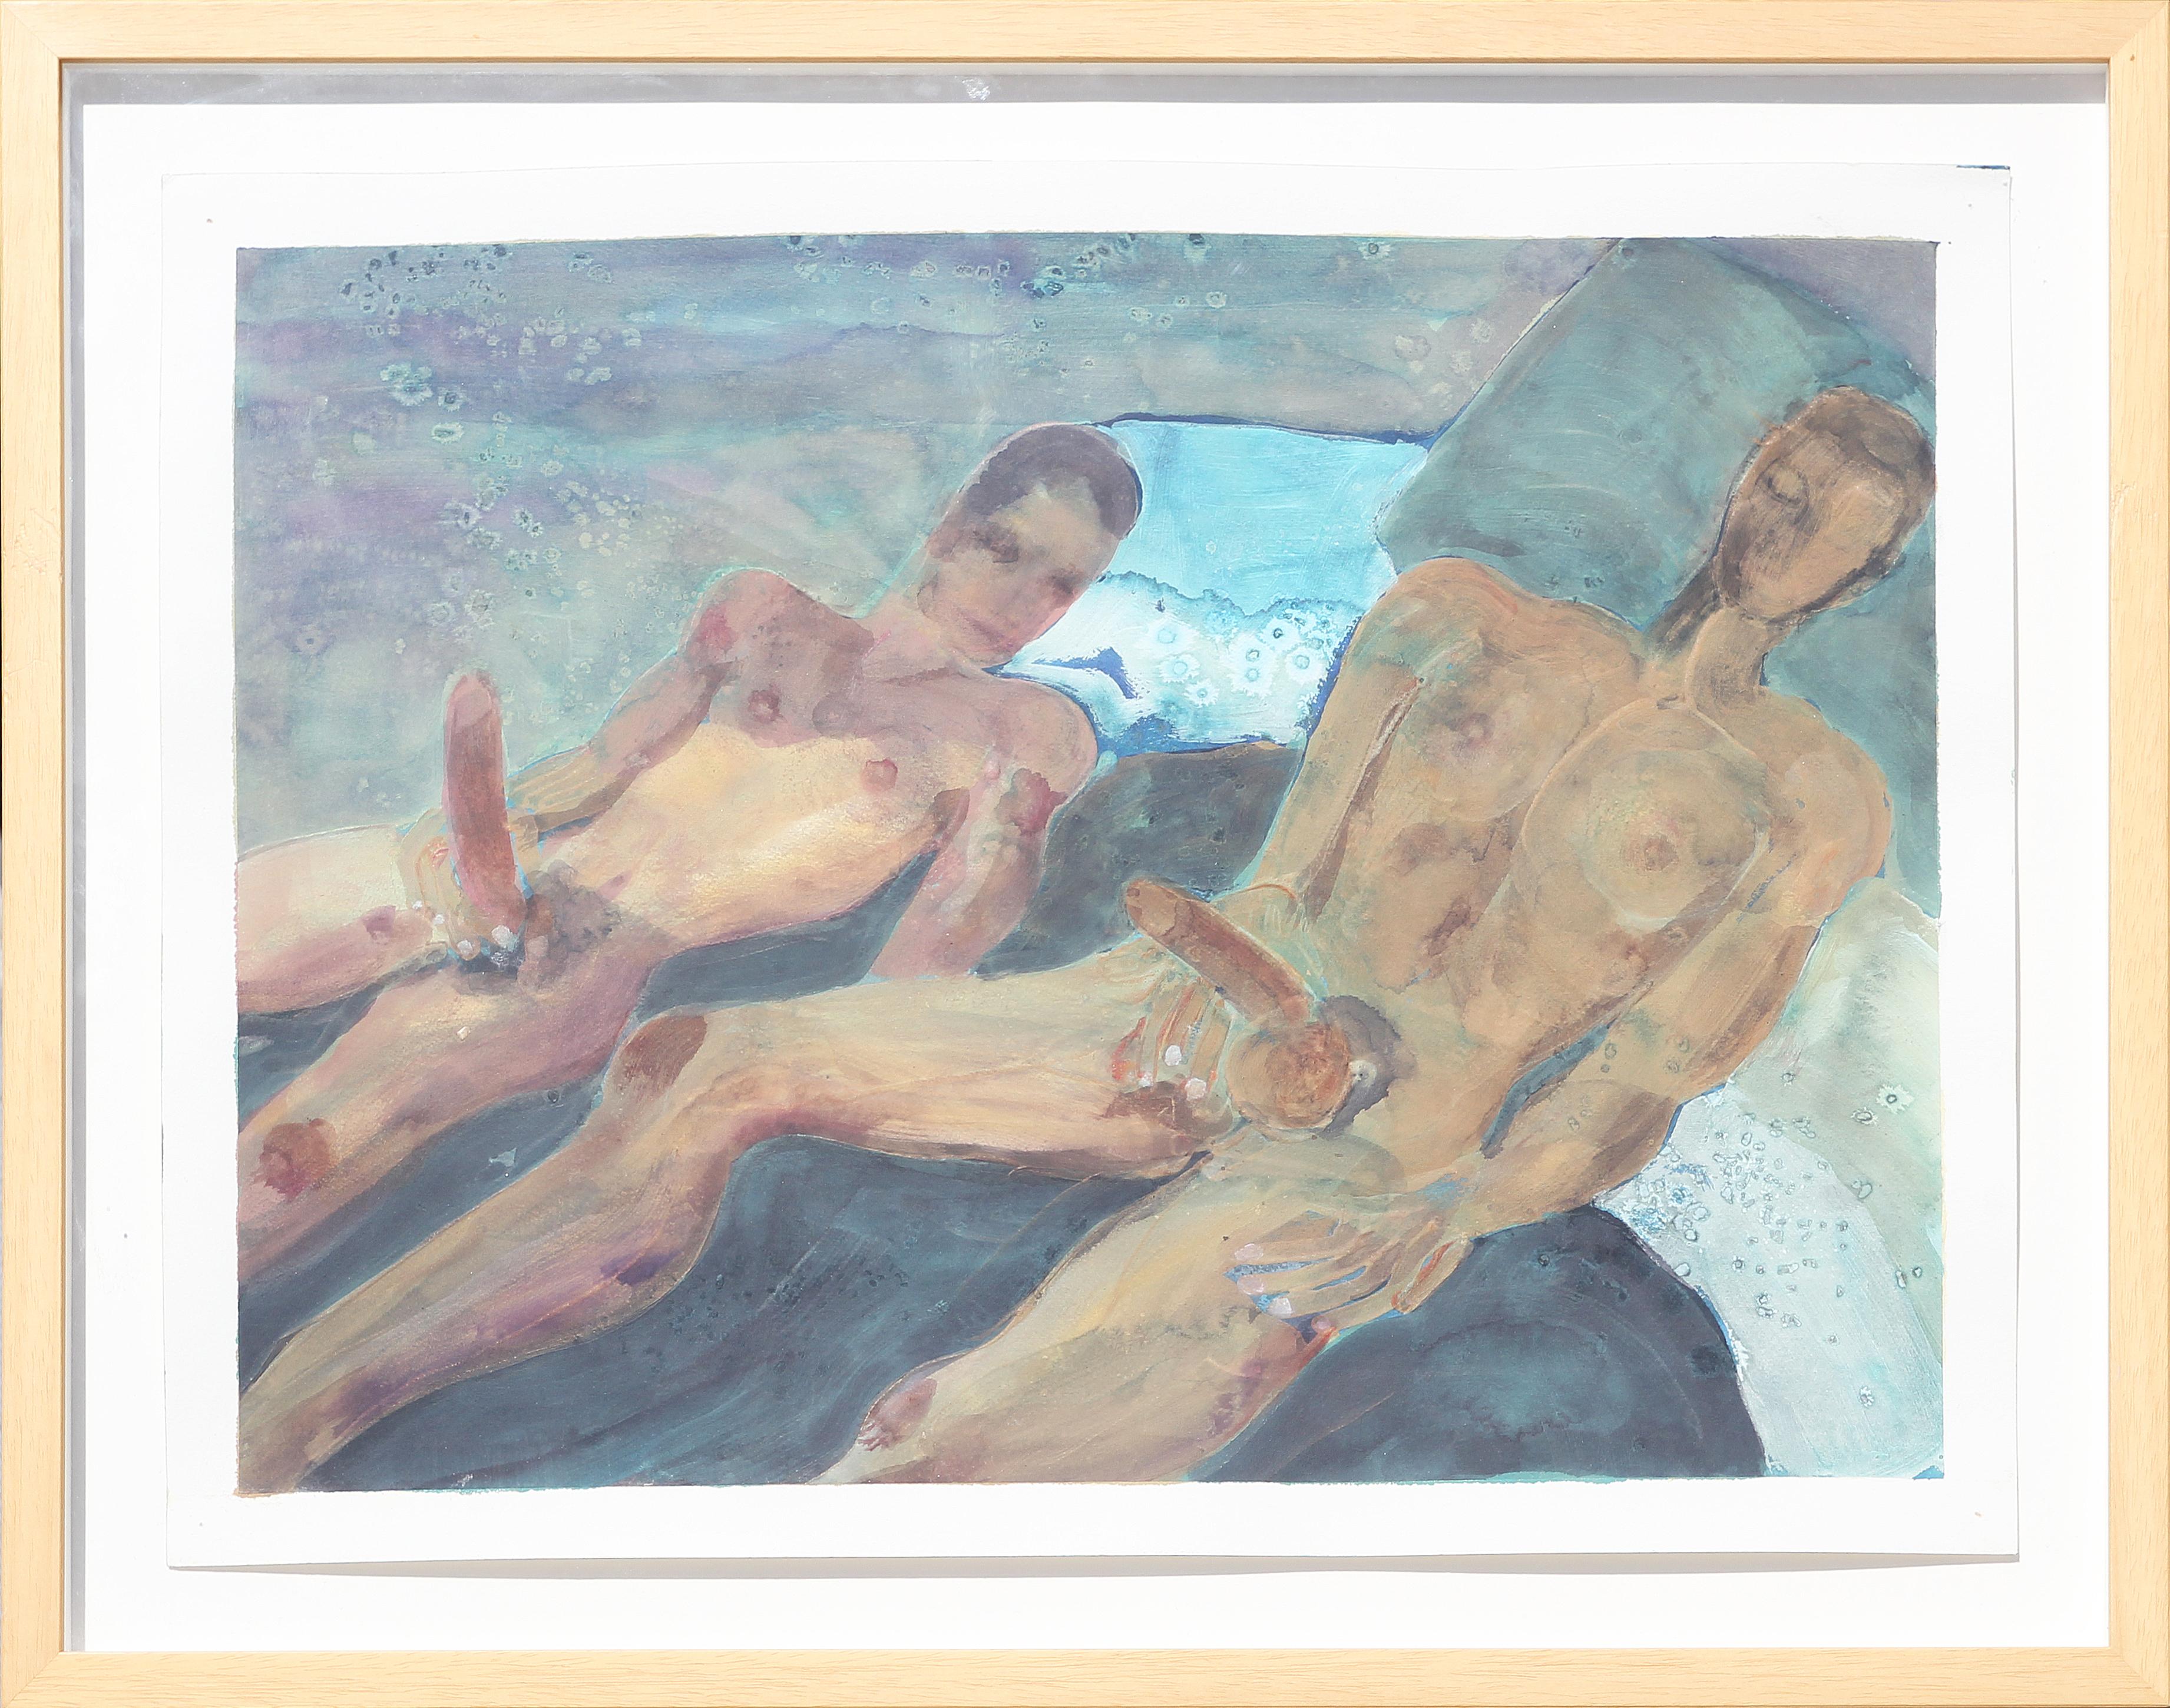 Steve Louis Figurative Art - "Boys on Blue Bed II" Dark Blue Toned Sensual Homoerotic Figurative Watercolor 